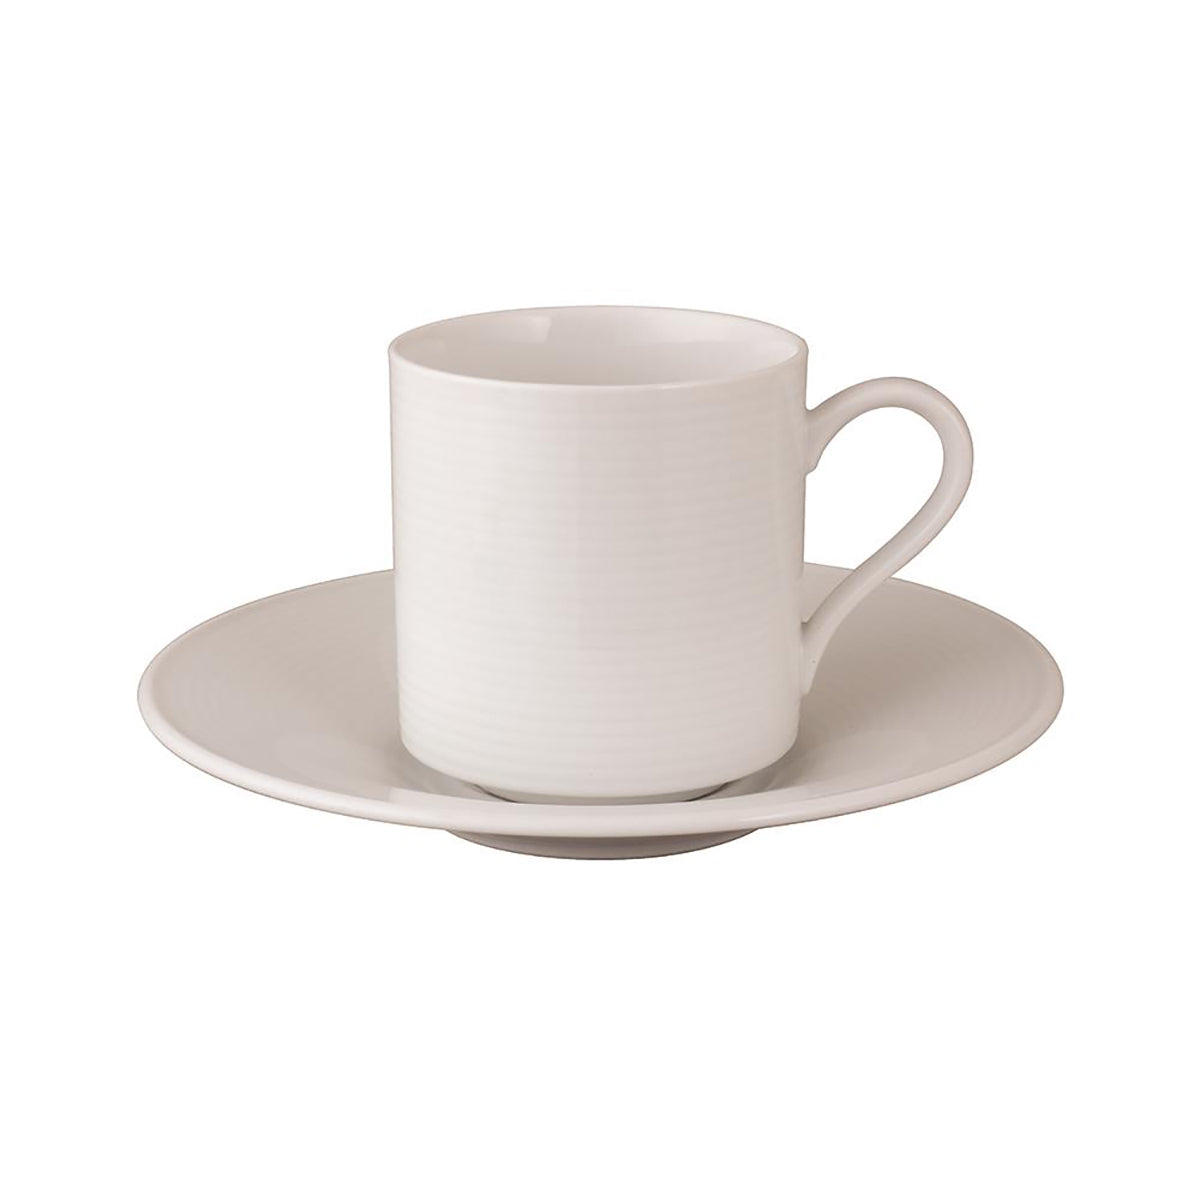 96090 Patra Porcelain Aura Saucer For Teacup 96088 (931/2006) Tomkin Australia Hospitality Supplies